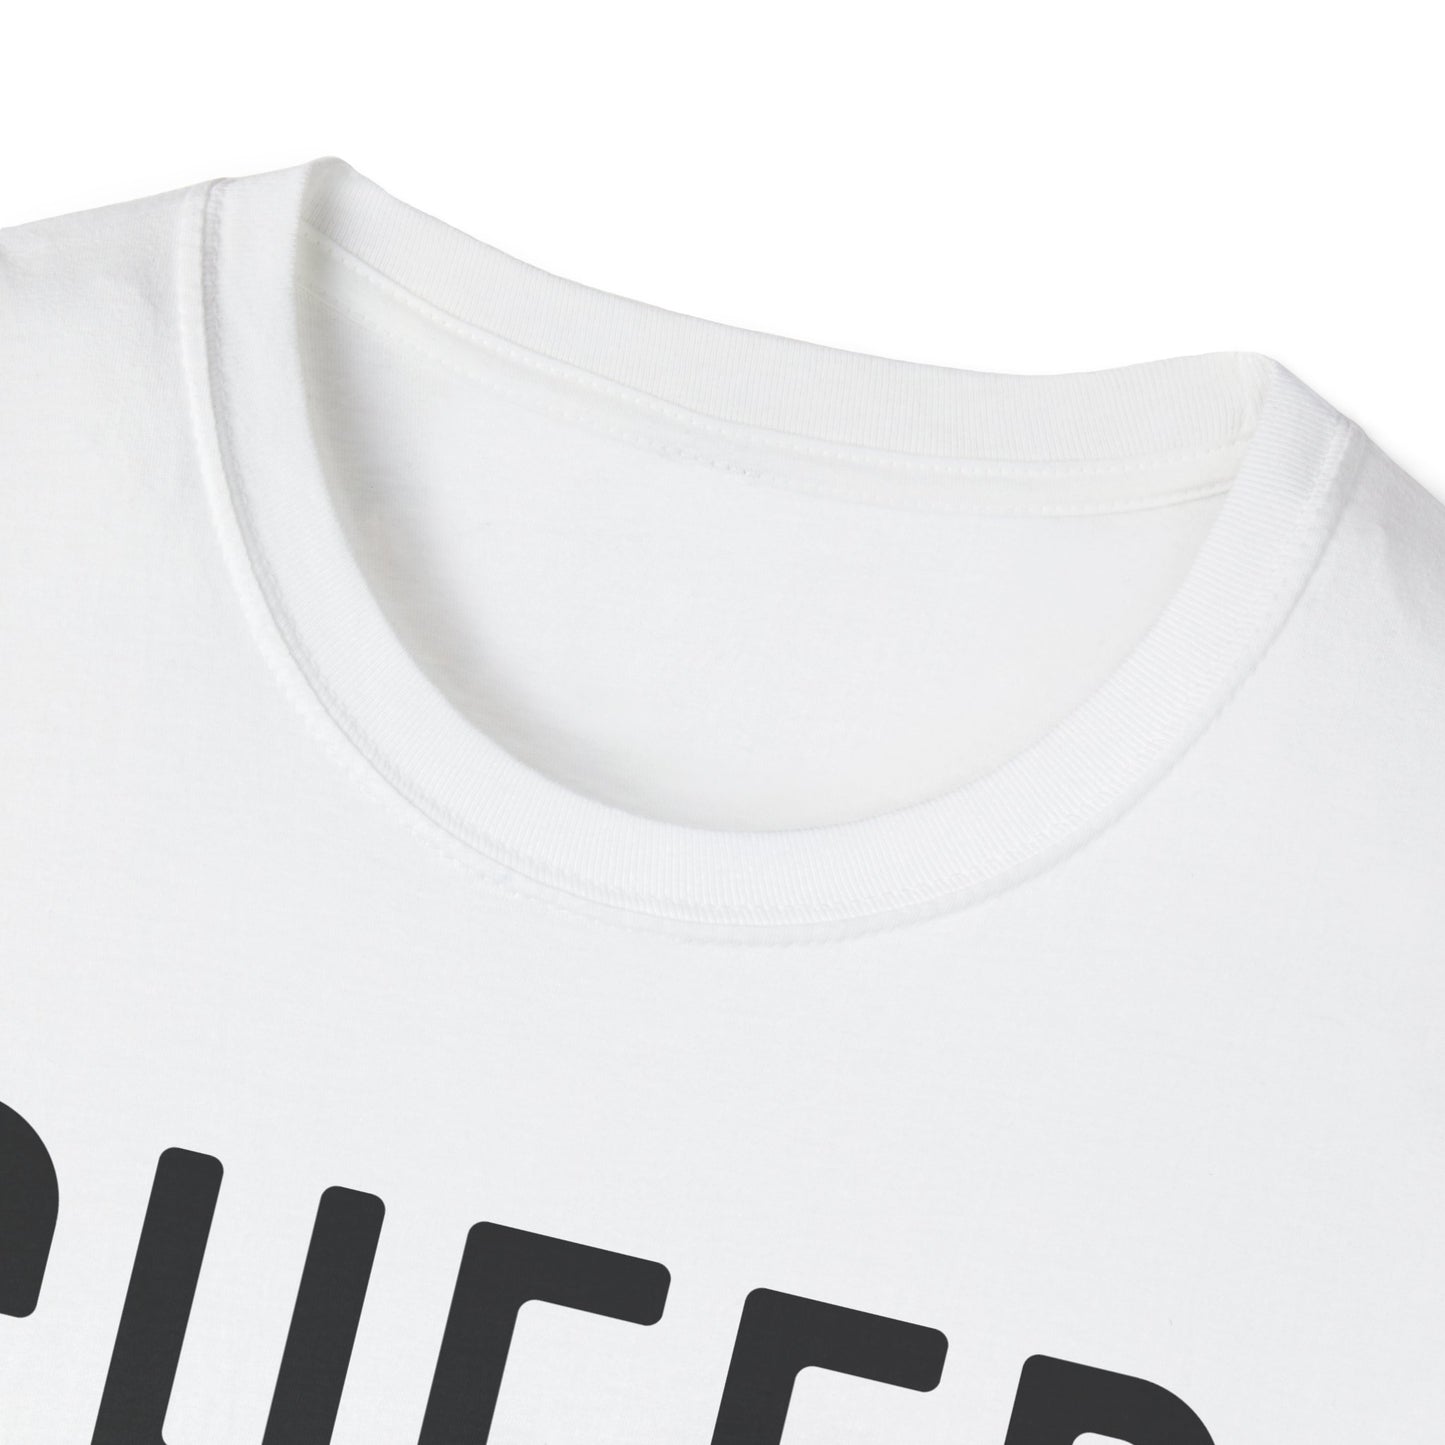 Cheer Mom - Unisex Softstyle T-Shirt